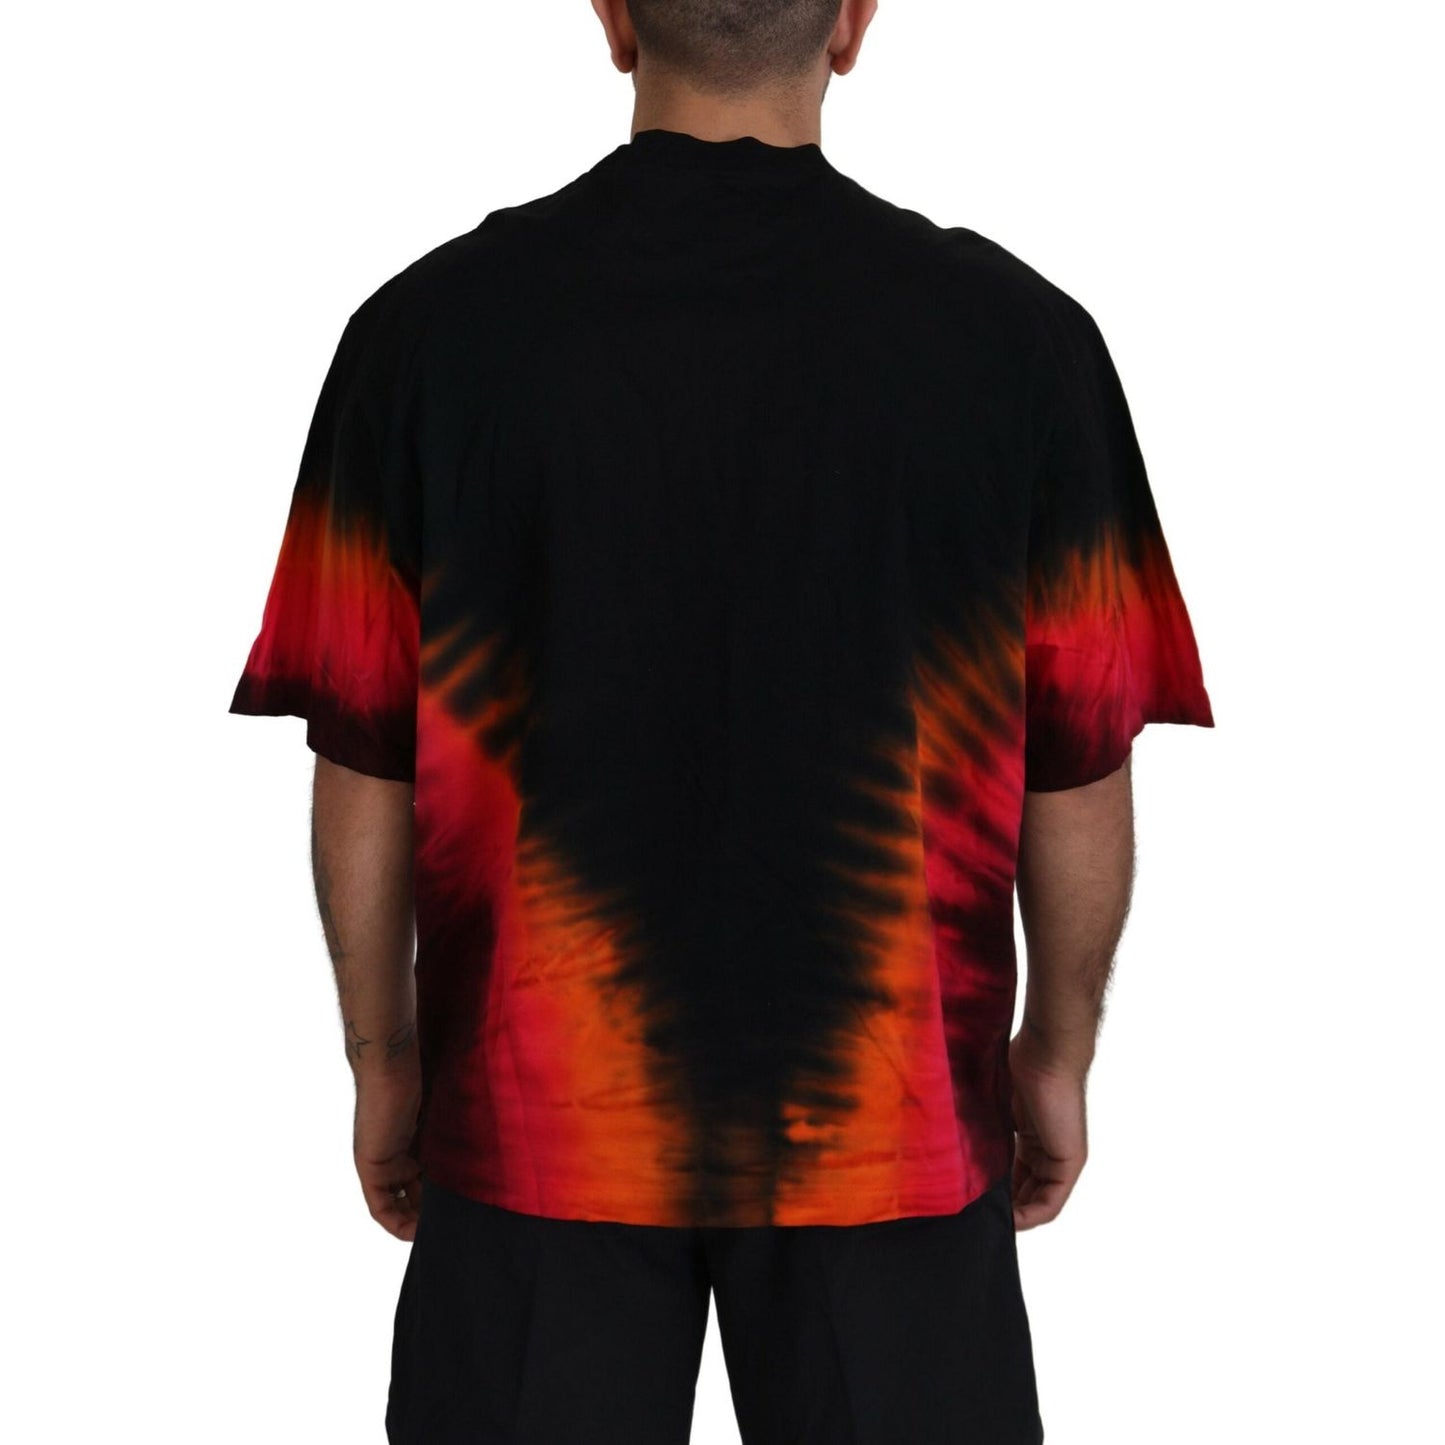 Dsquared² Black Orange Cotton Short Sleeves Crewneck T-shirt black-orange-cotton-short-sleeves-crewneck-t-shirt